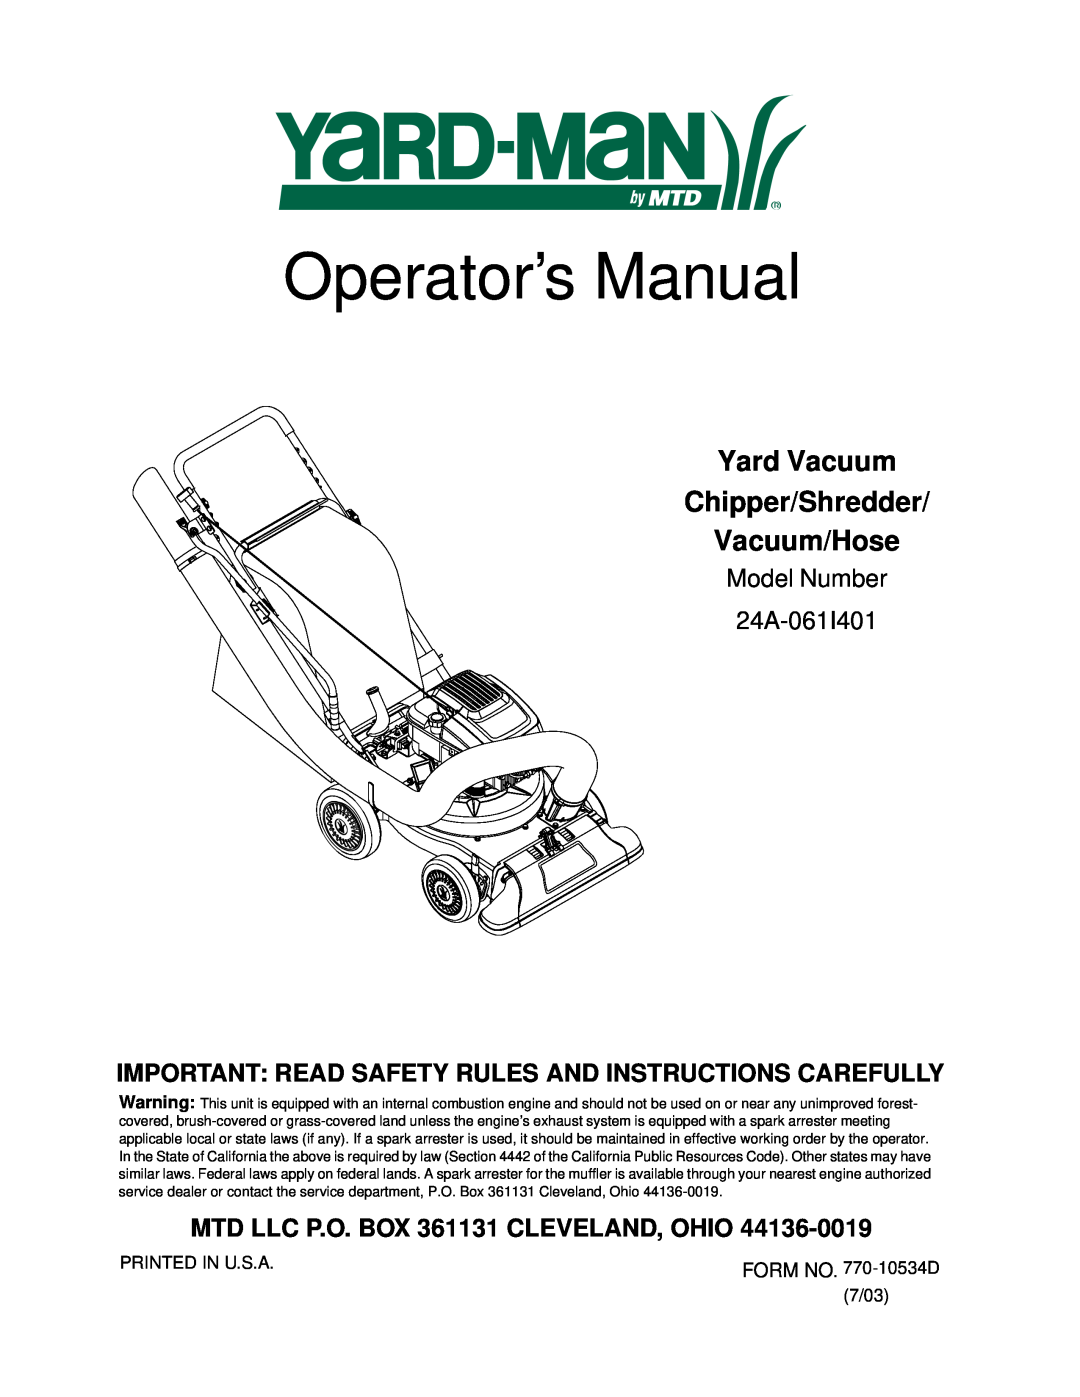 Yard-Man manual Operator’s Manual, Yard Vacuum Chipper/Shredder Vacuum/Hose, Model Number 24A-061I401 